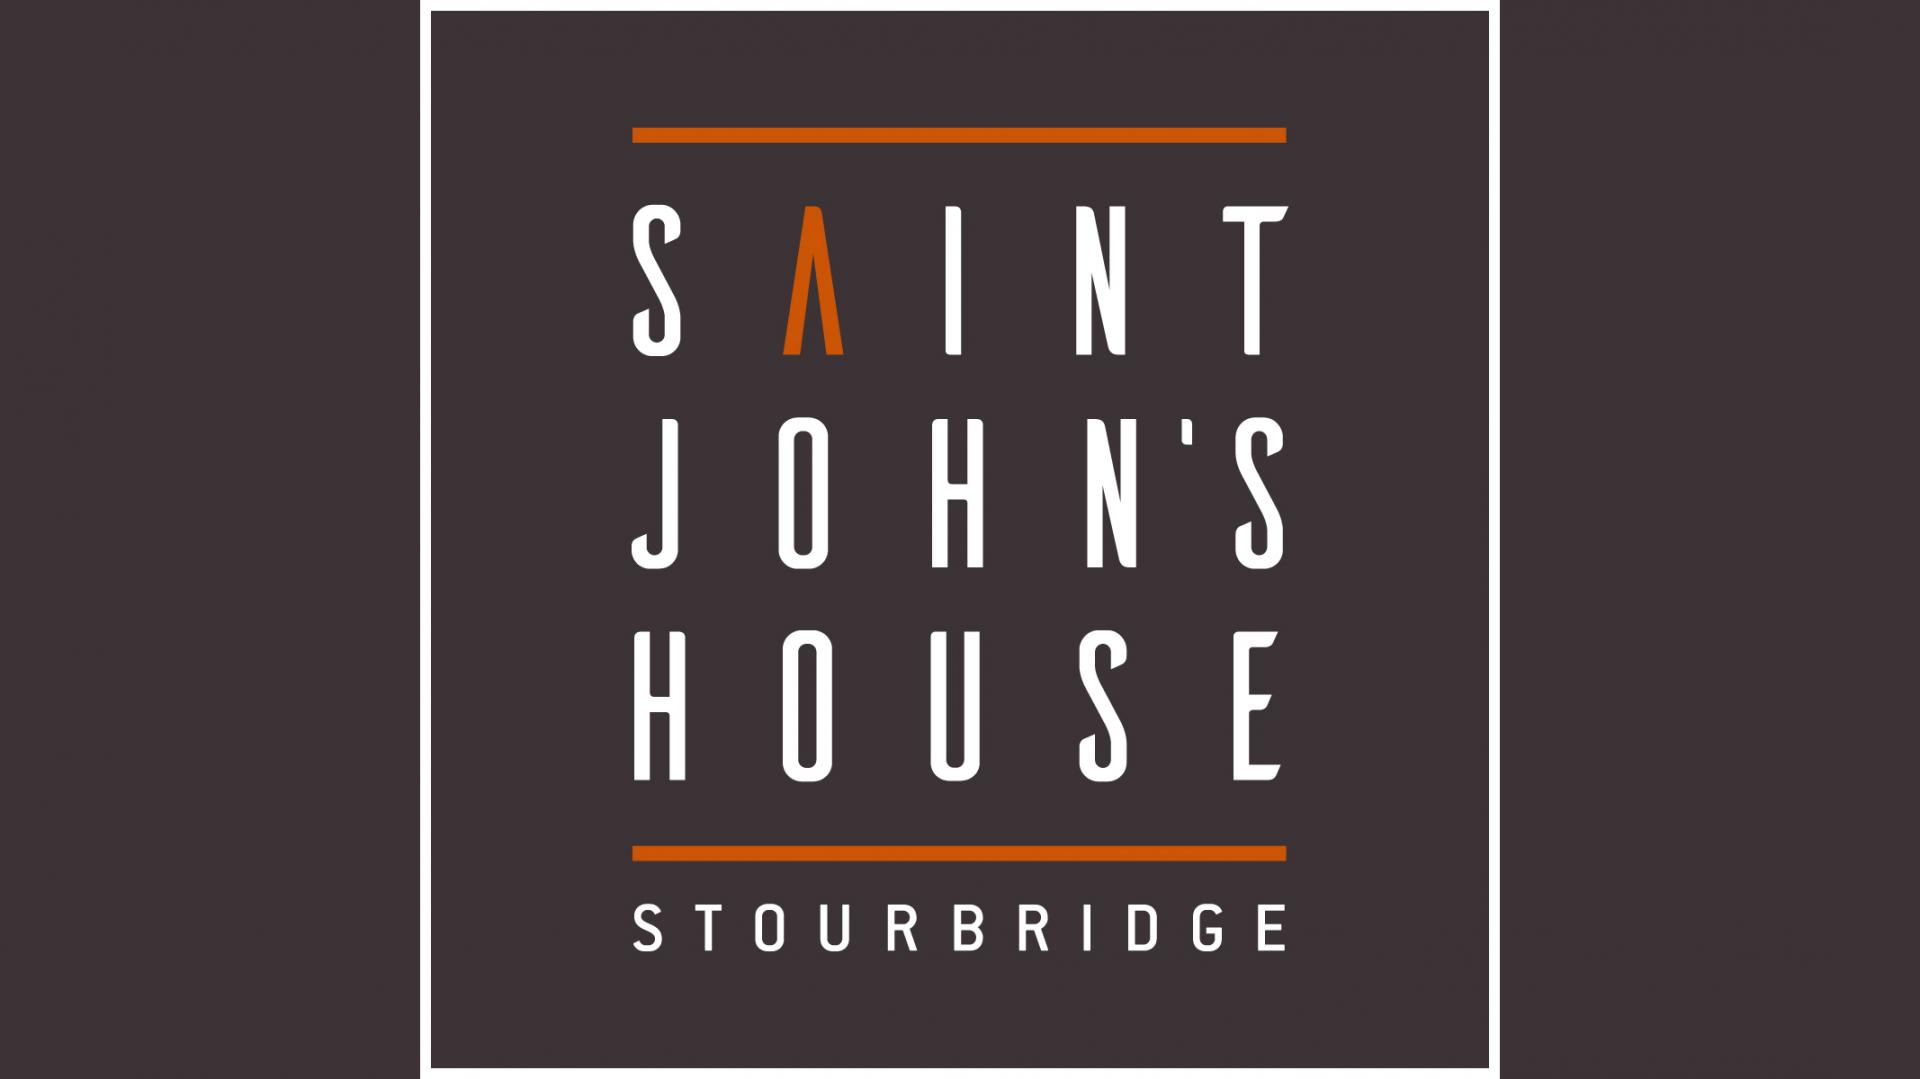 St. John's House, St. John's Road, Stourbridge